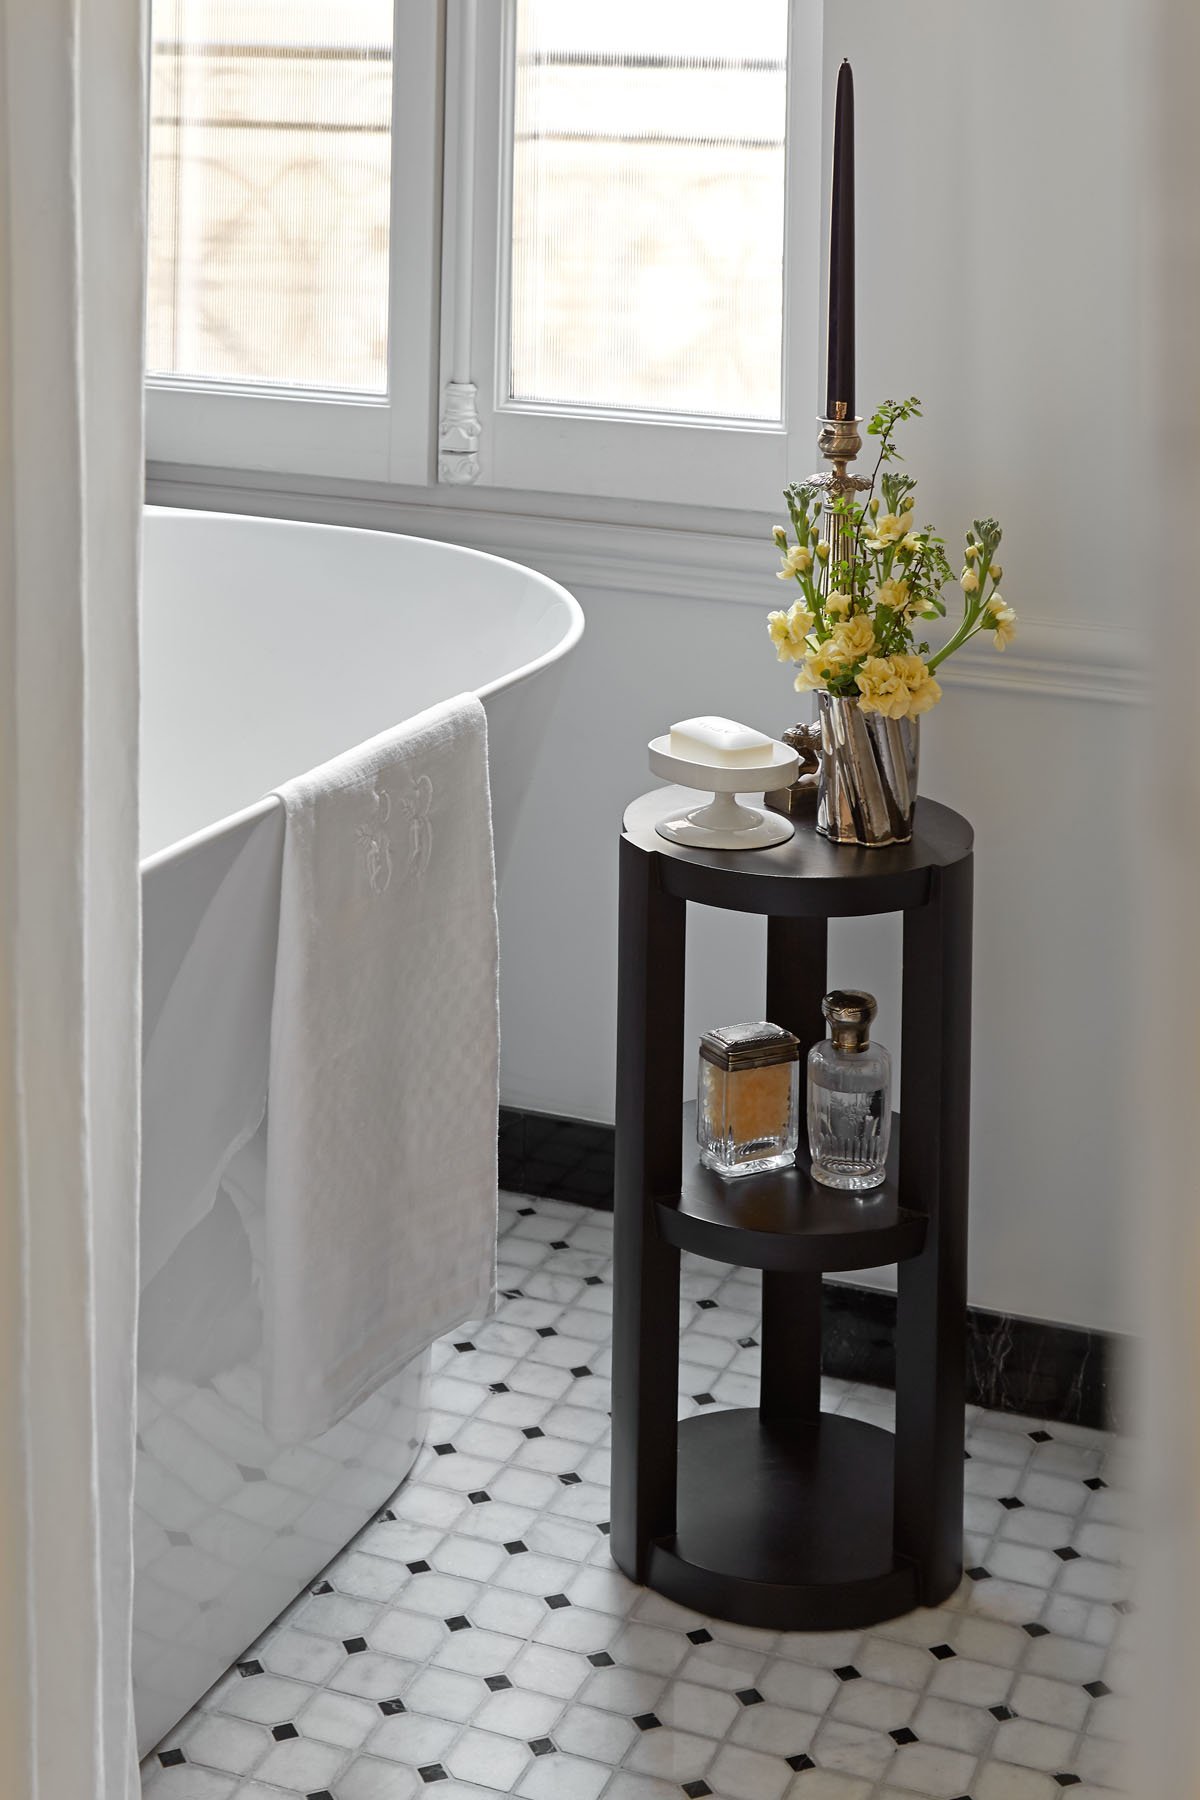 lichelle-silvestry-interiors-paris-recamier-bathroom-details.jpg